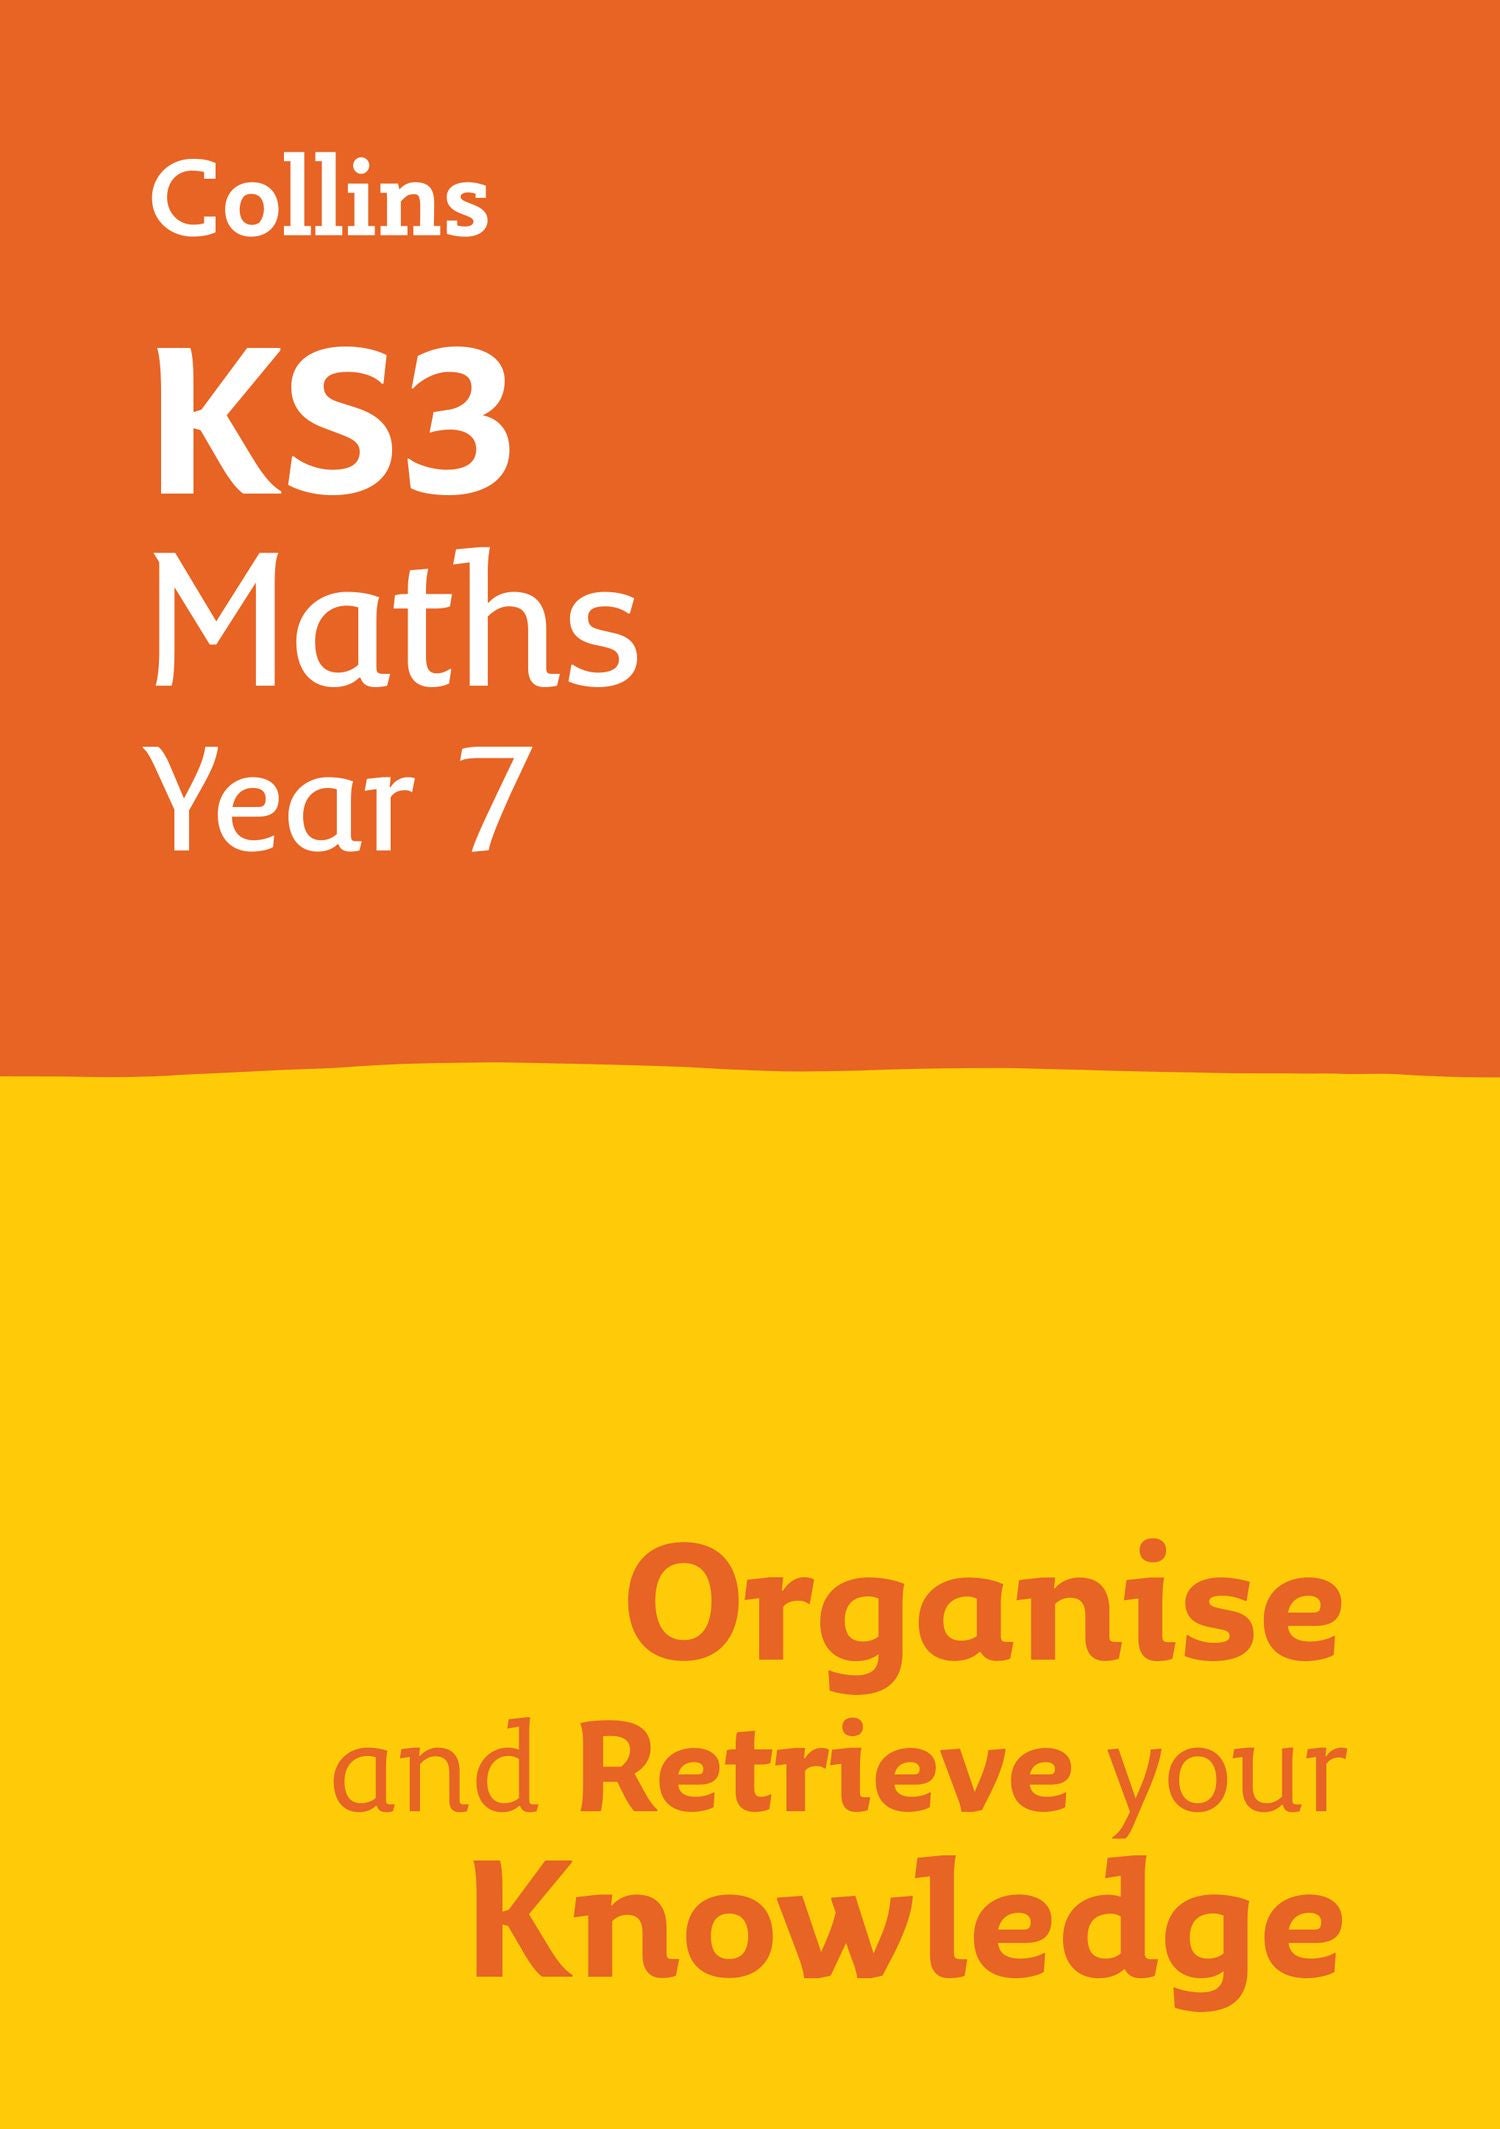 collins-ks3-revision-ks3-maths-year-7-organise-and-retrieve-your-kn